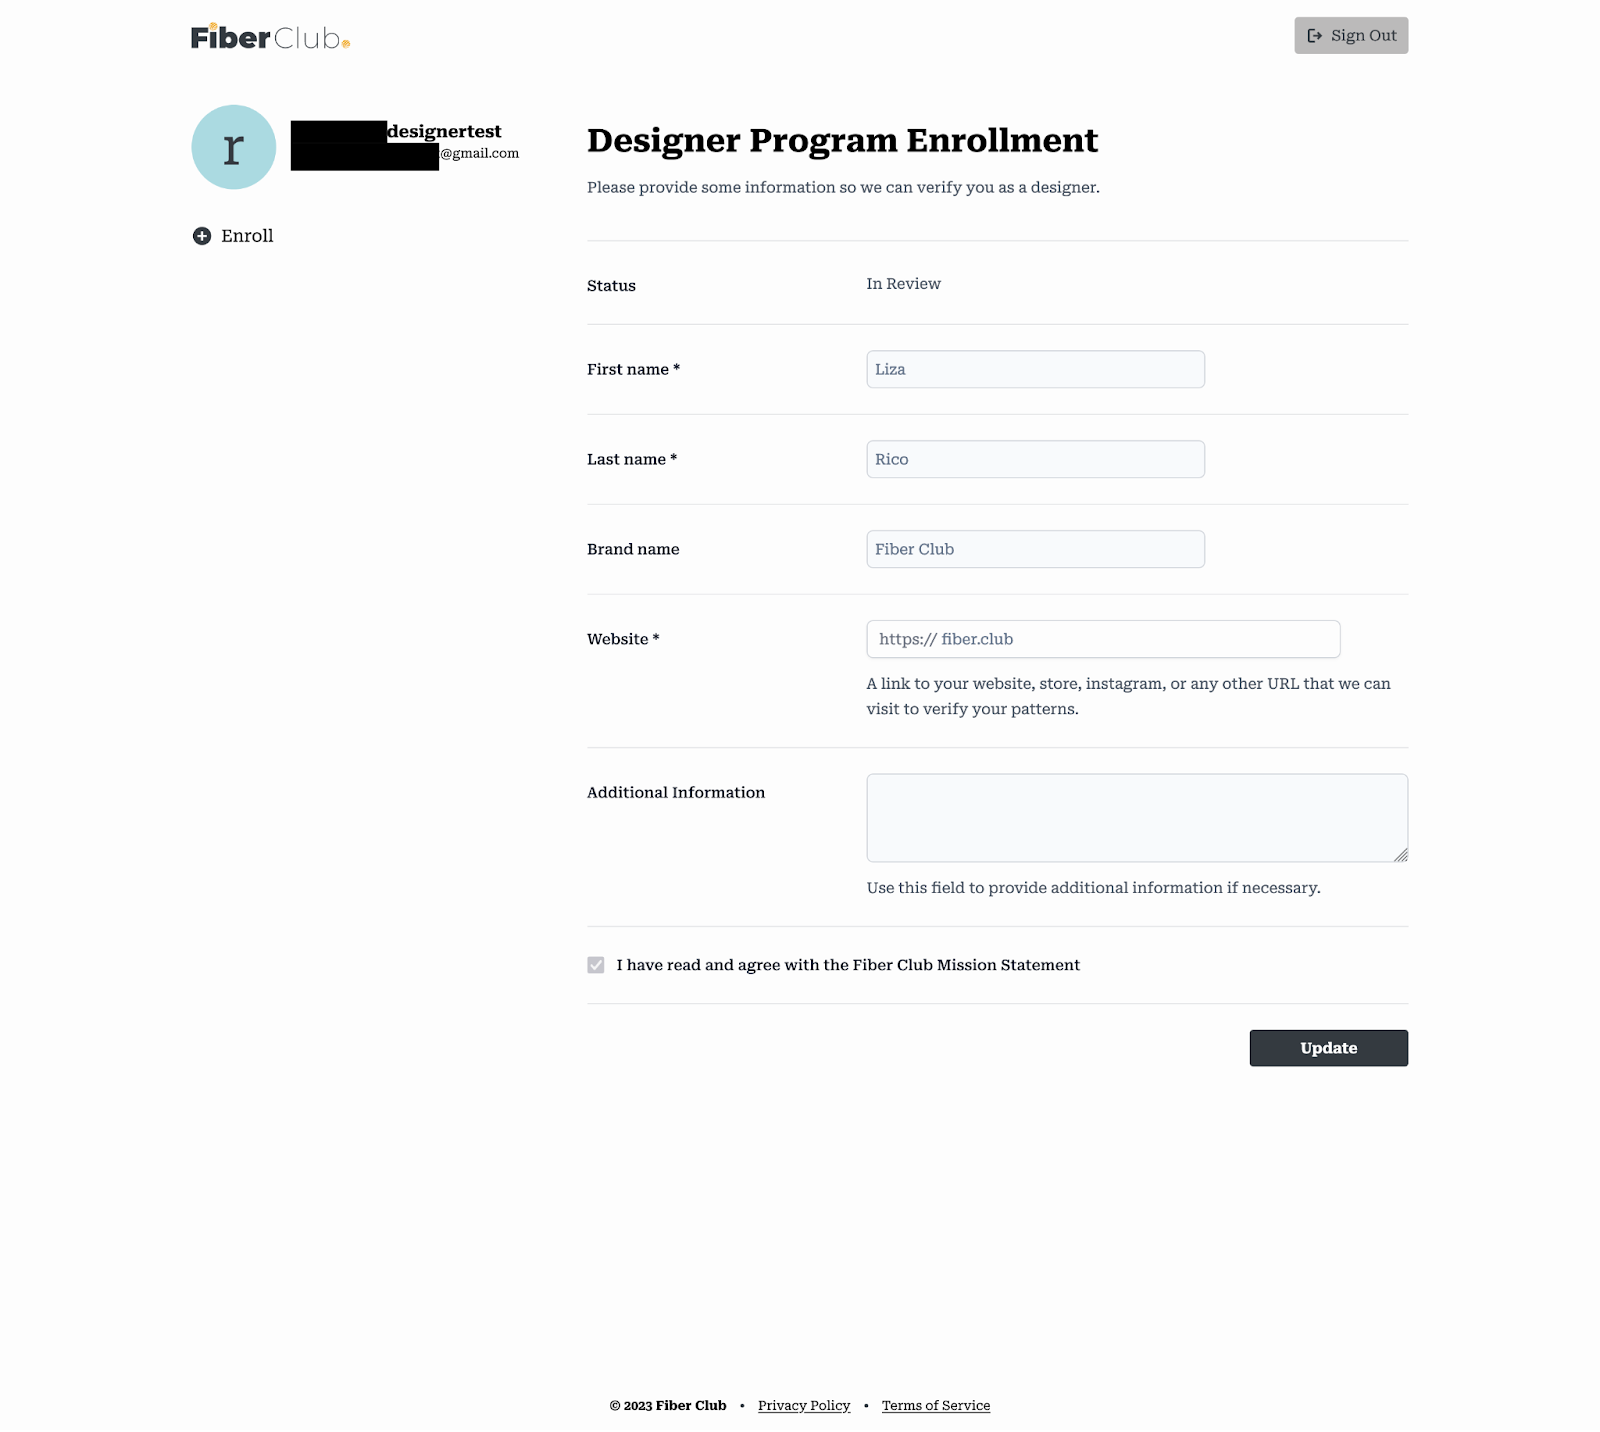 A screenshot of the Fiber Club Designer Program Enrollment page.